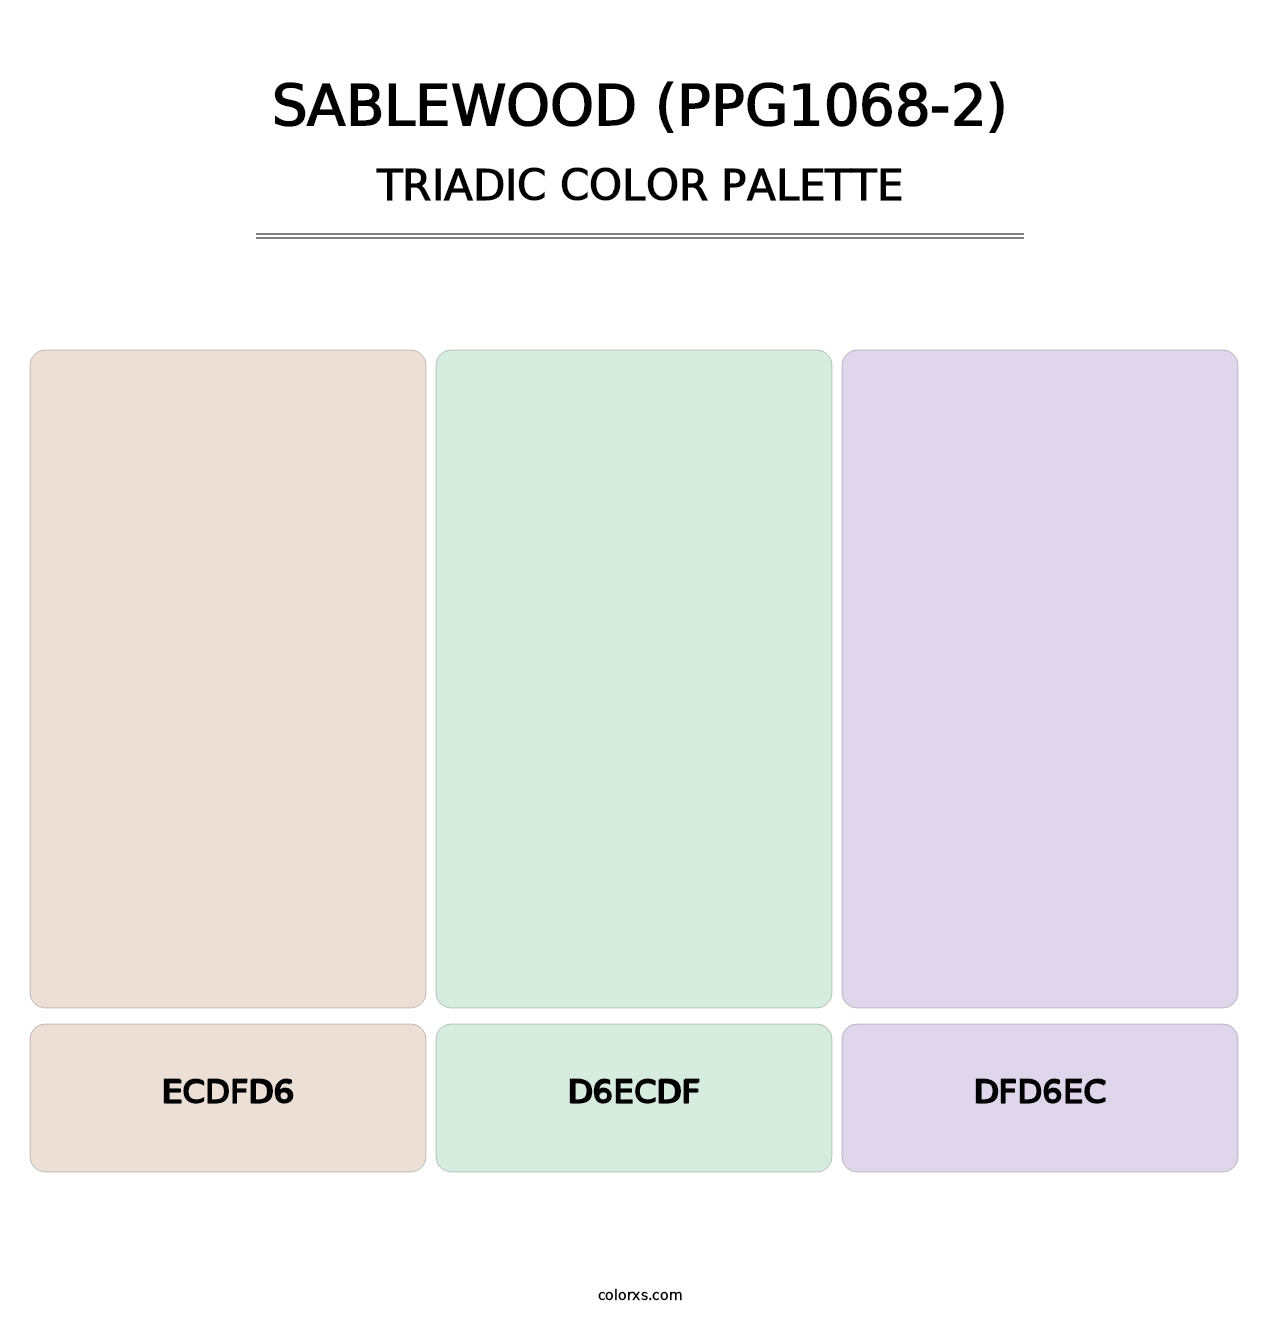 Sablewood (PPG1068-2) - Triadic Color Palette